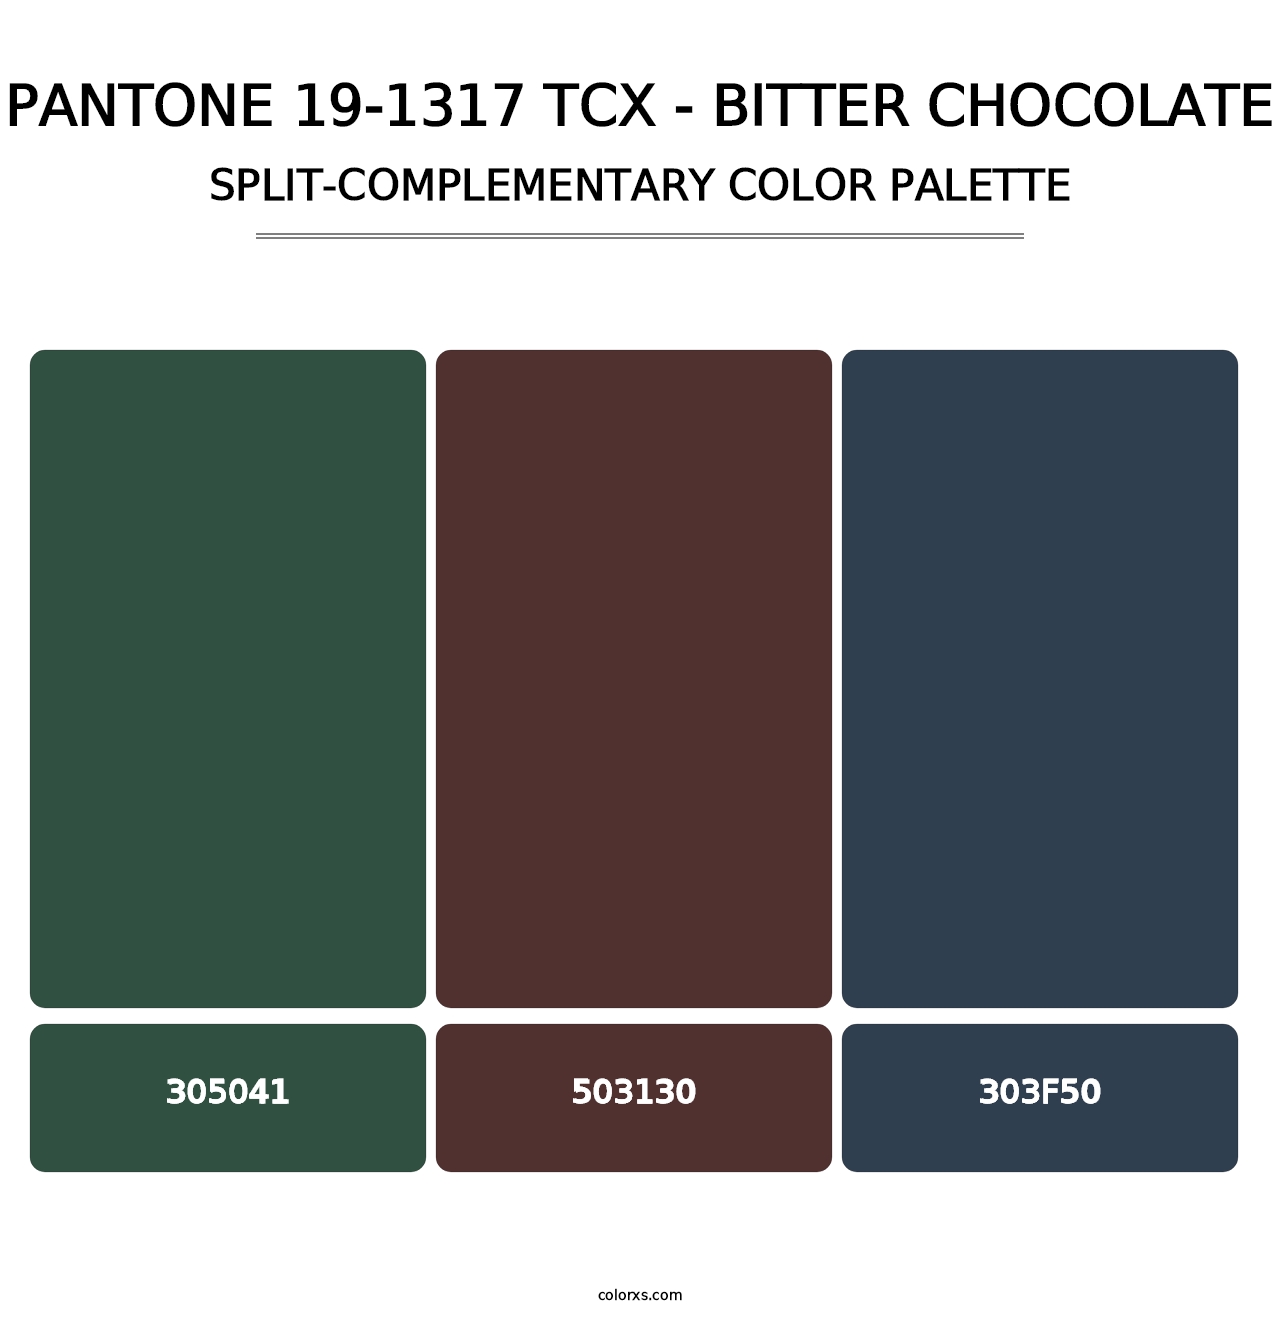 PANTONE 19-1317 TCX - Bitter Chocolate - Split-Complementary Color Palette